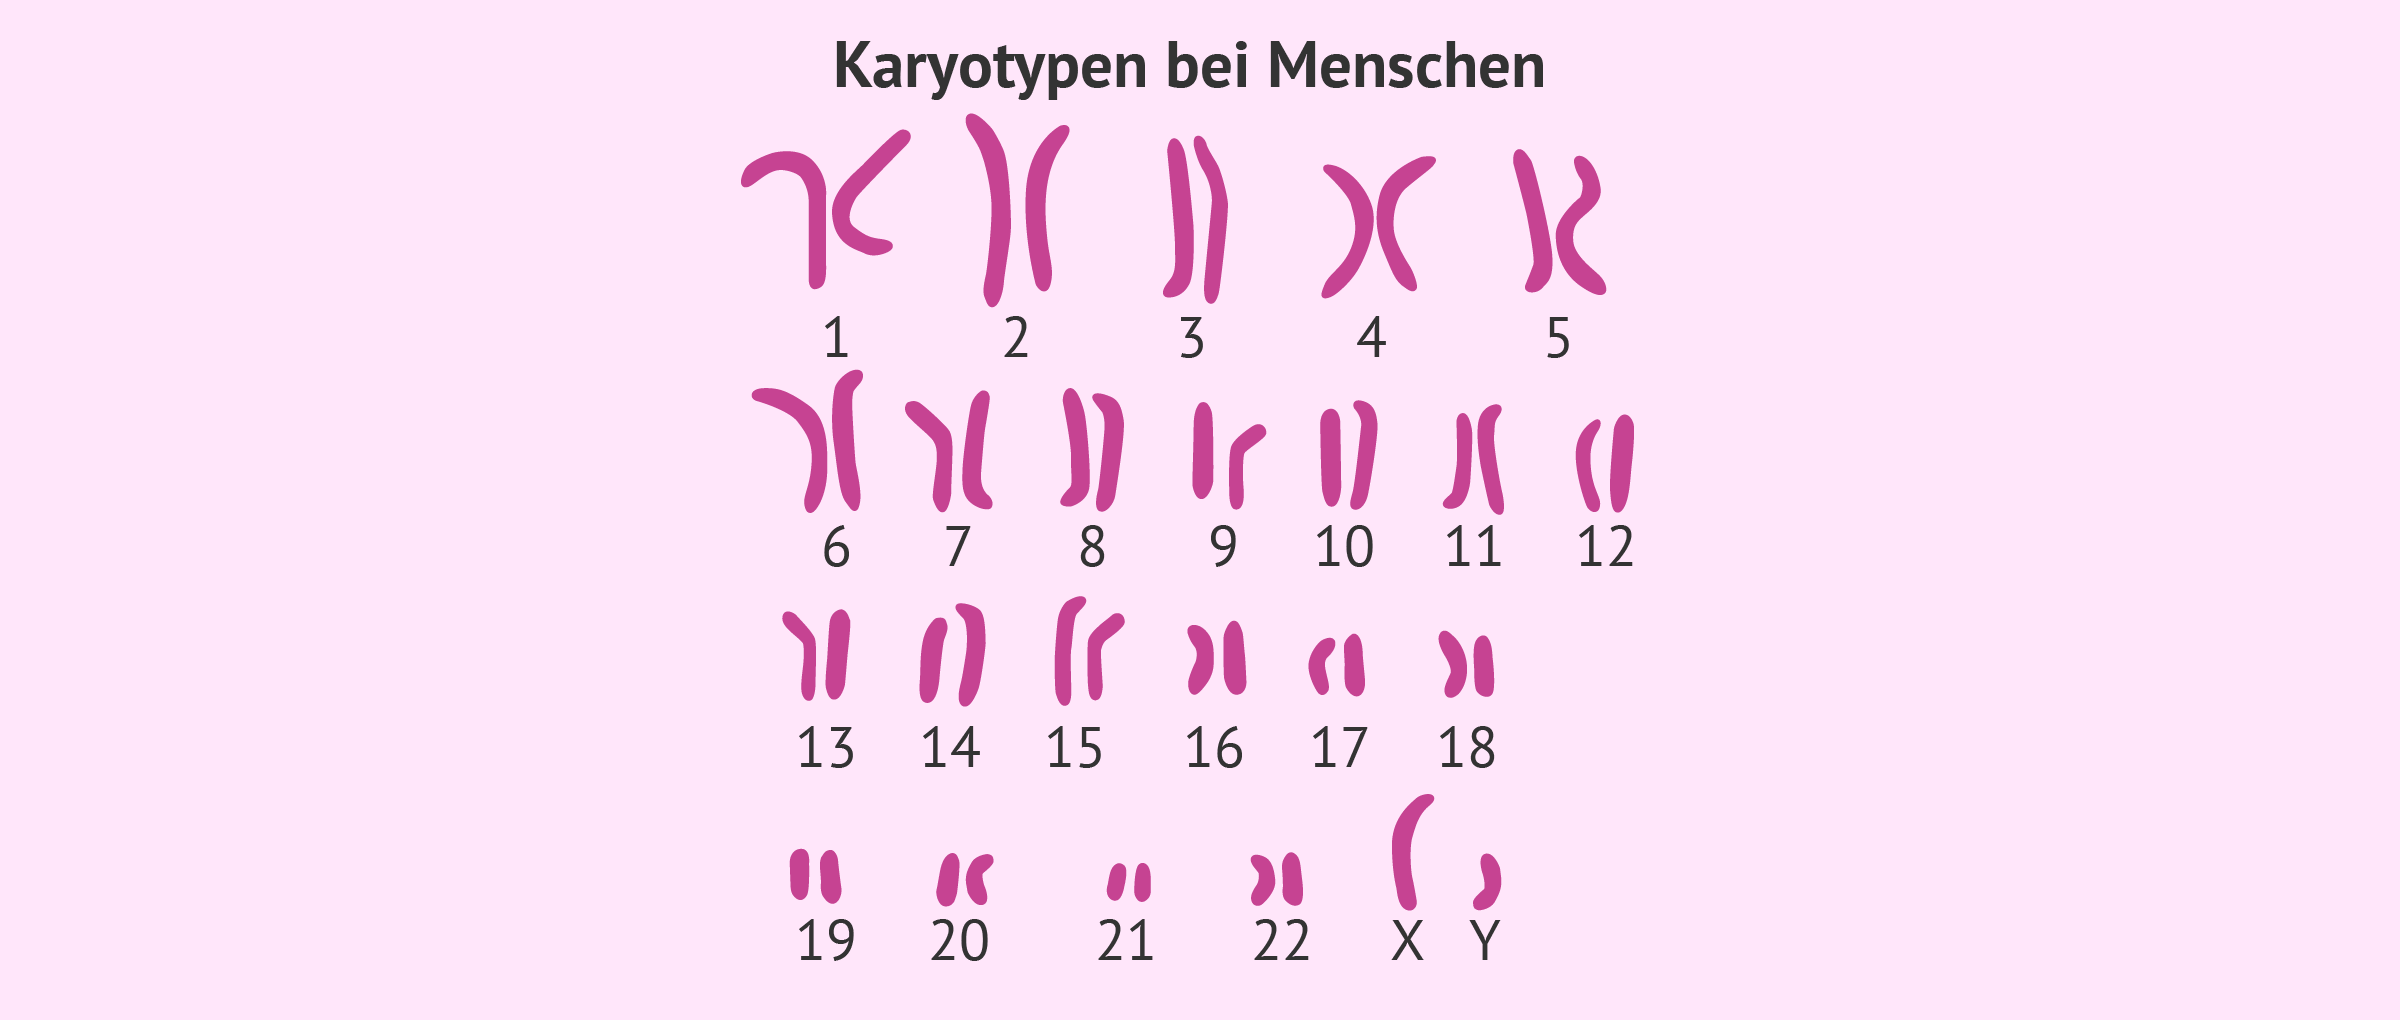 Karyotypen bei Menschen